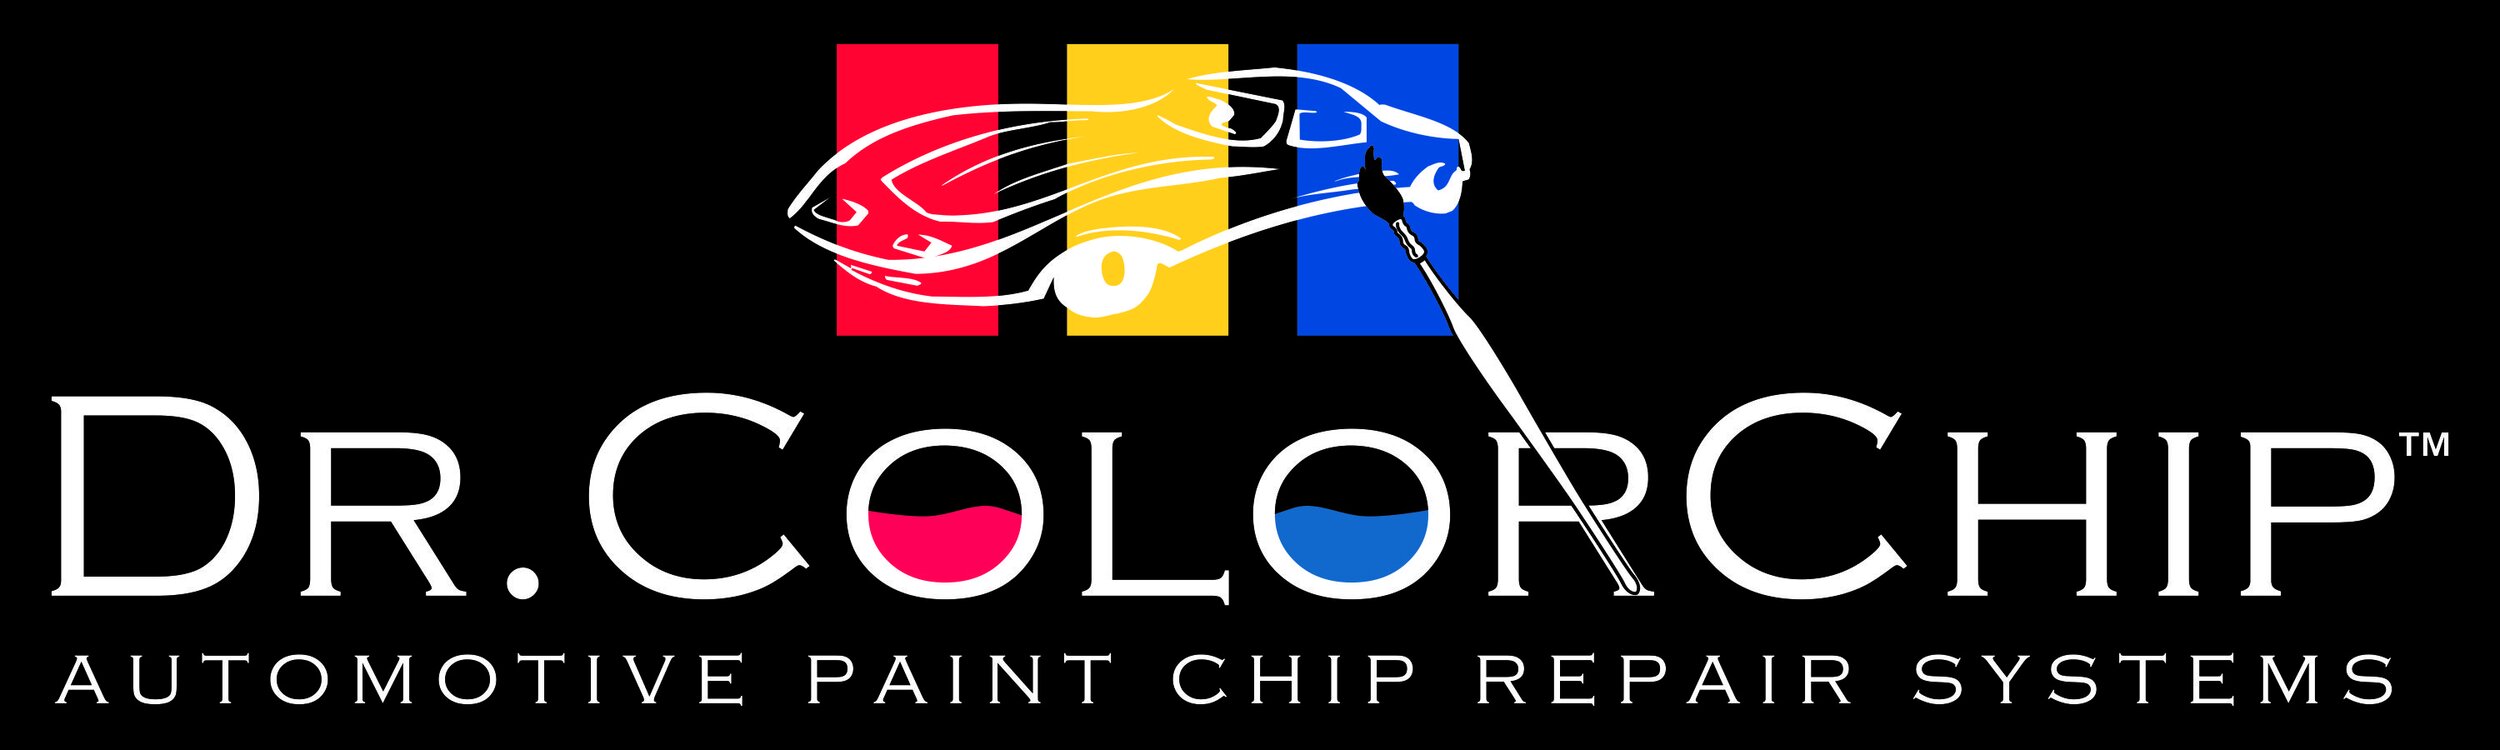 Dr. ColorChip Logo .jpg